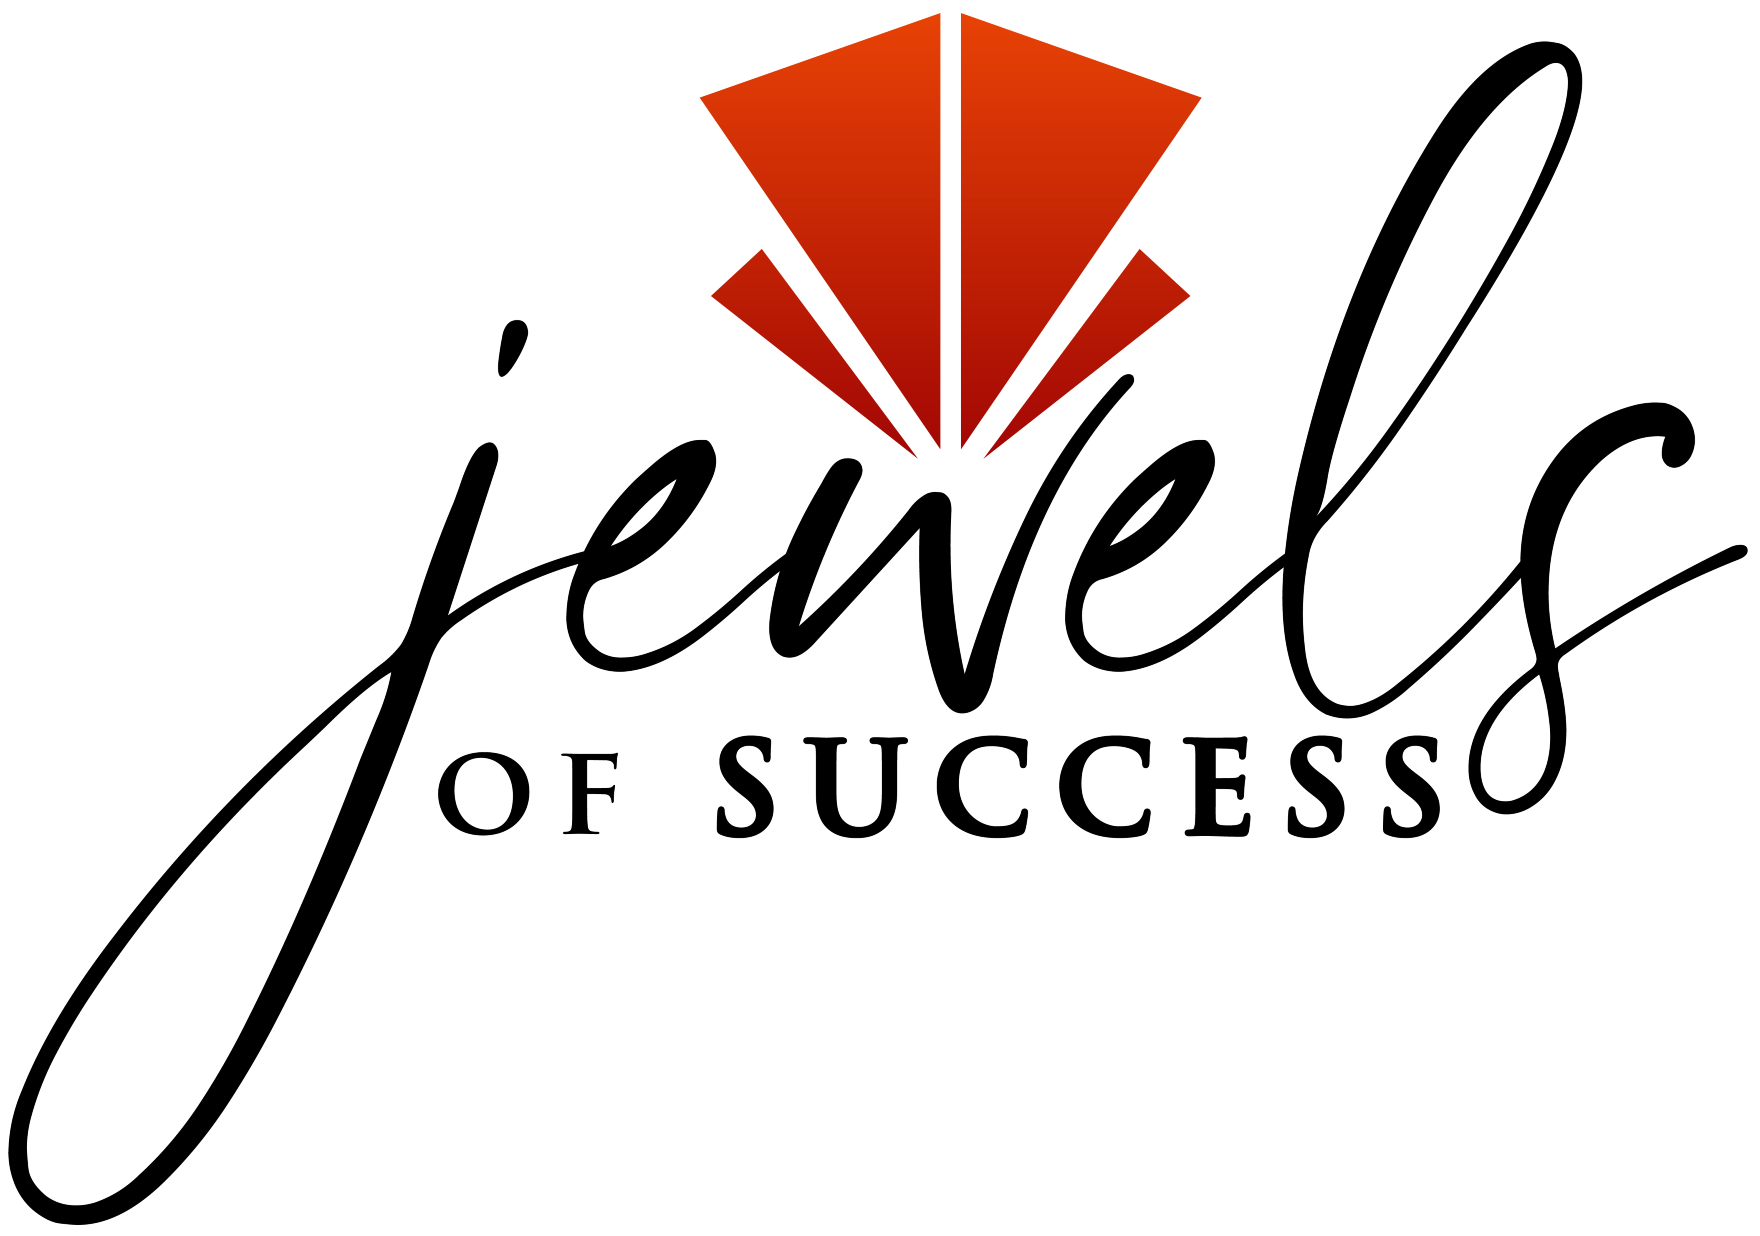 Jewels of Success